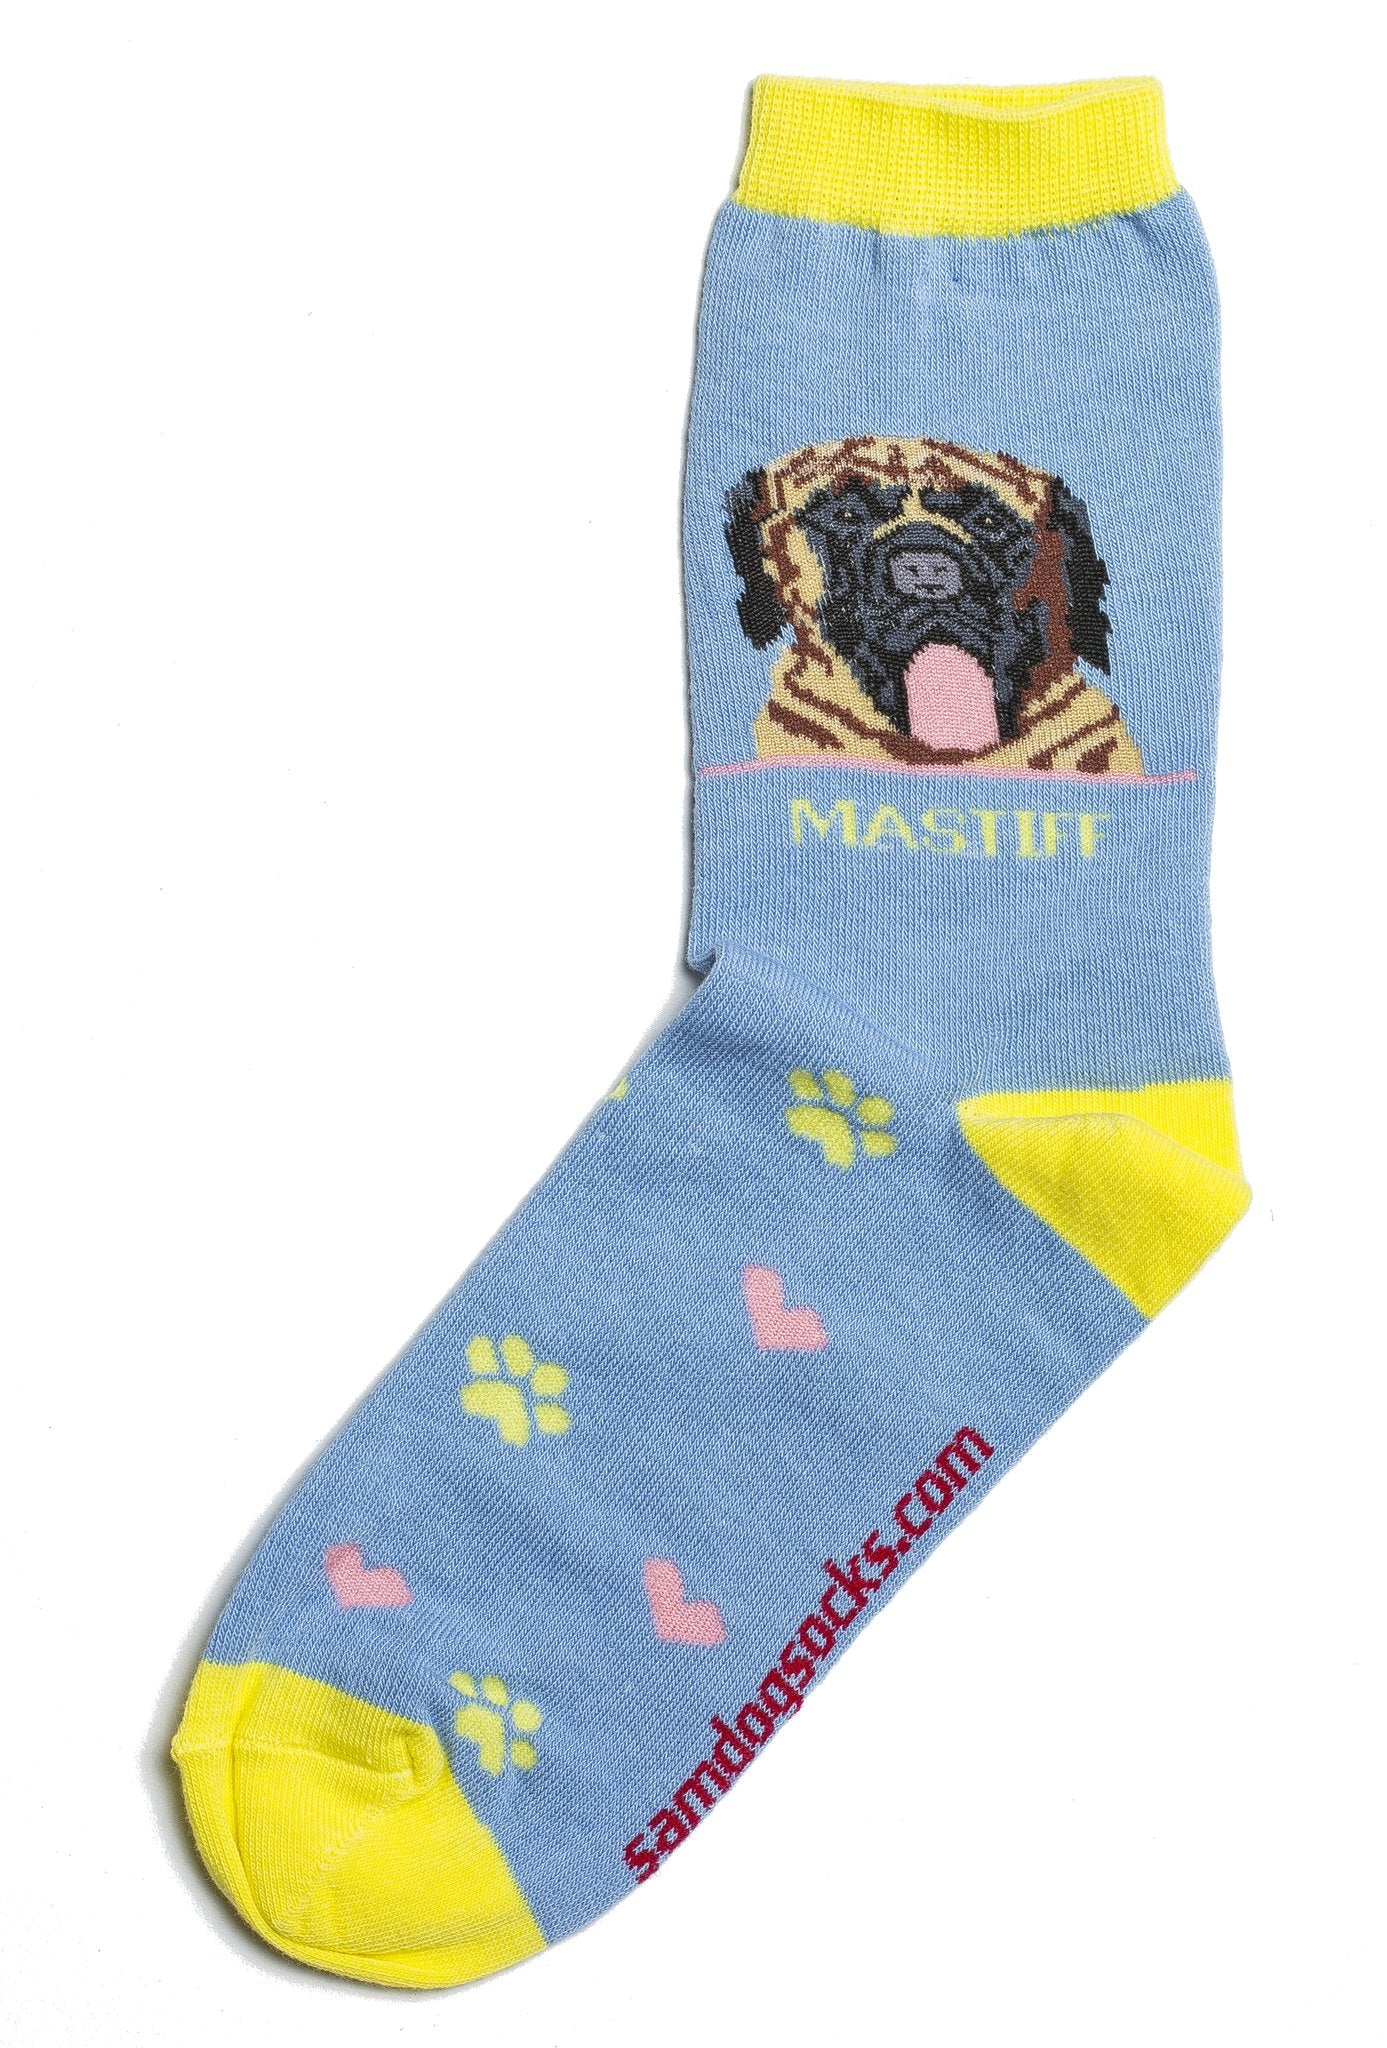 Mastiff socks for women - blue & yellow